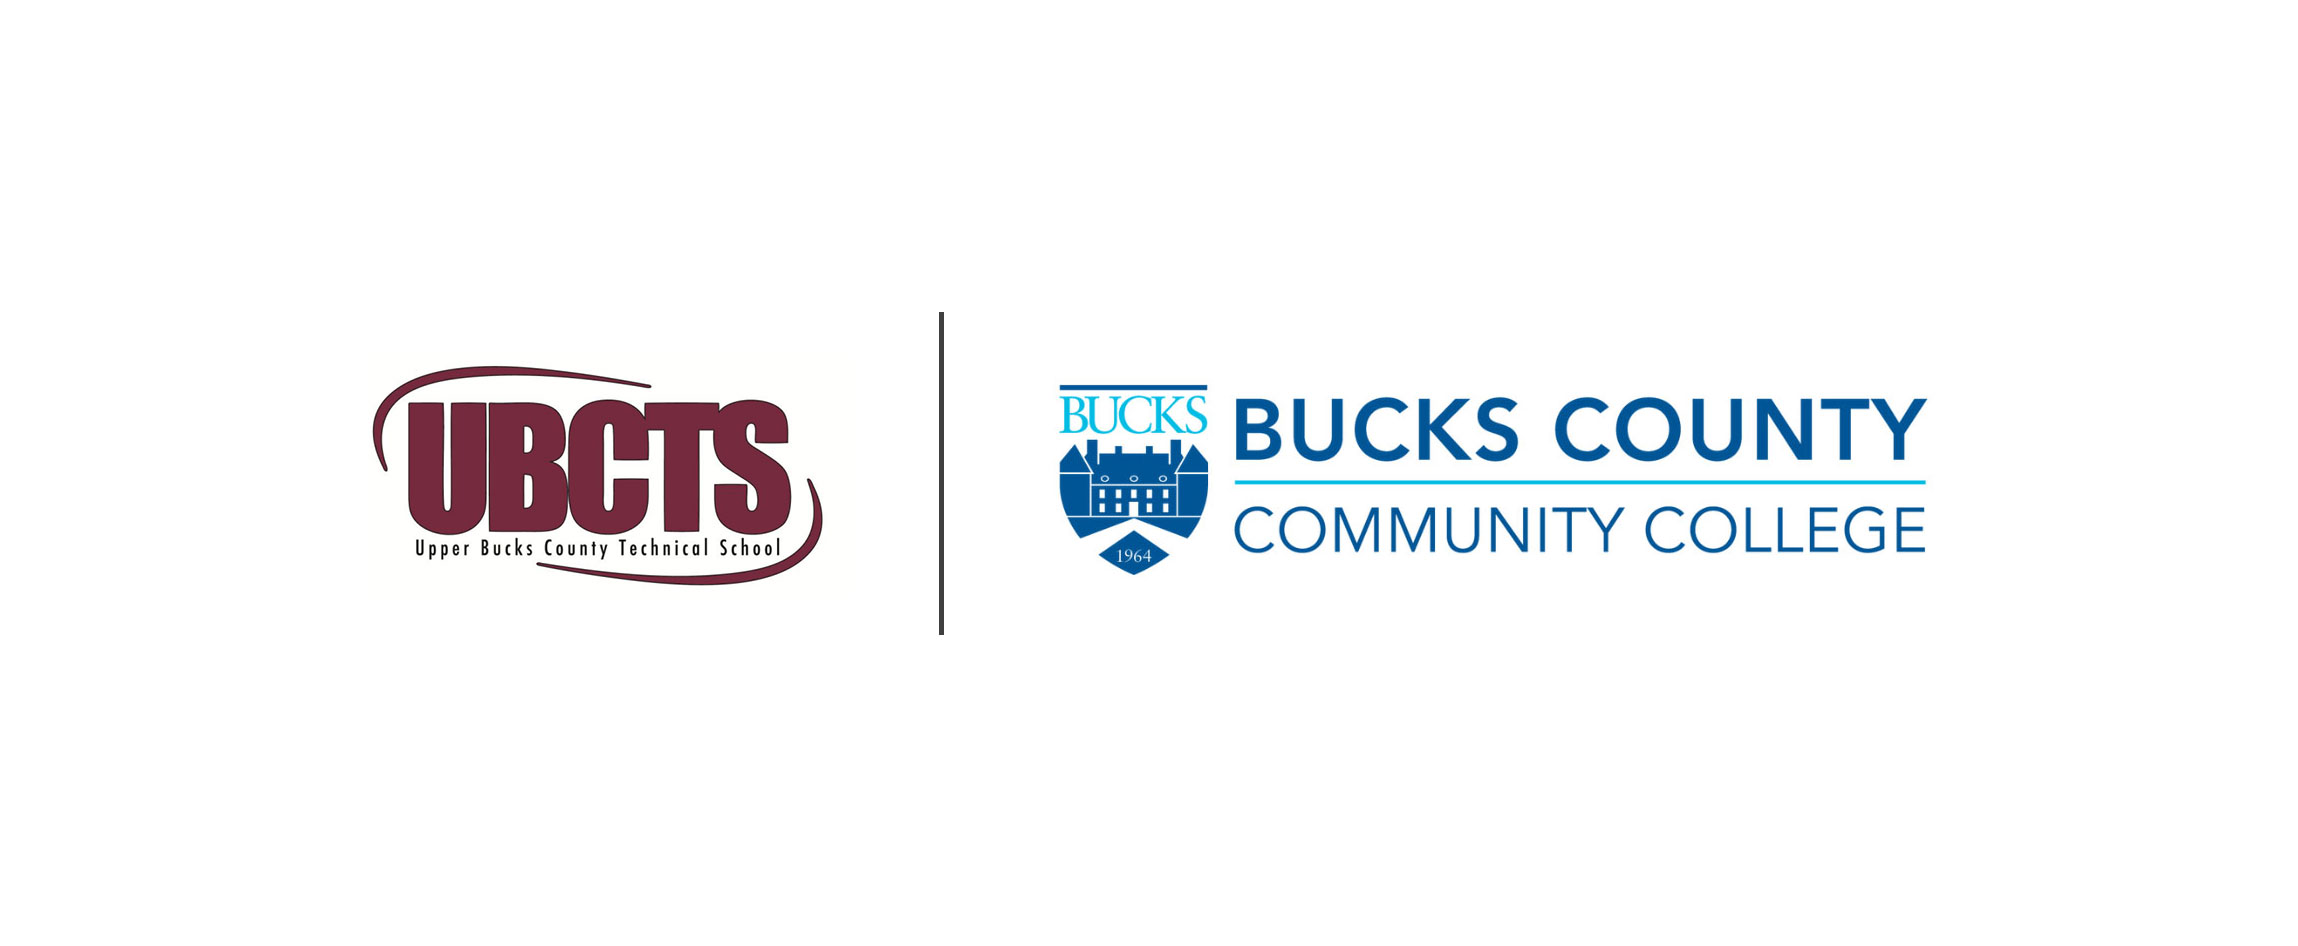 Upper Bucks County Technical School logo and Bucks County Community College logo